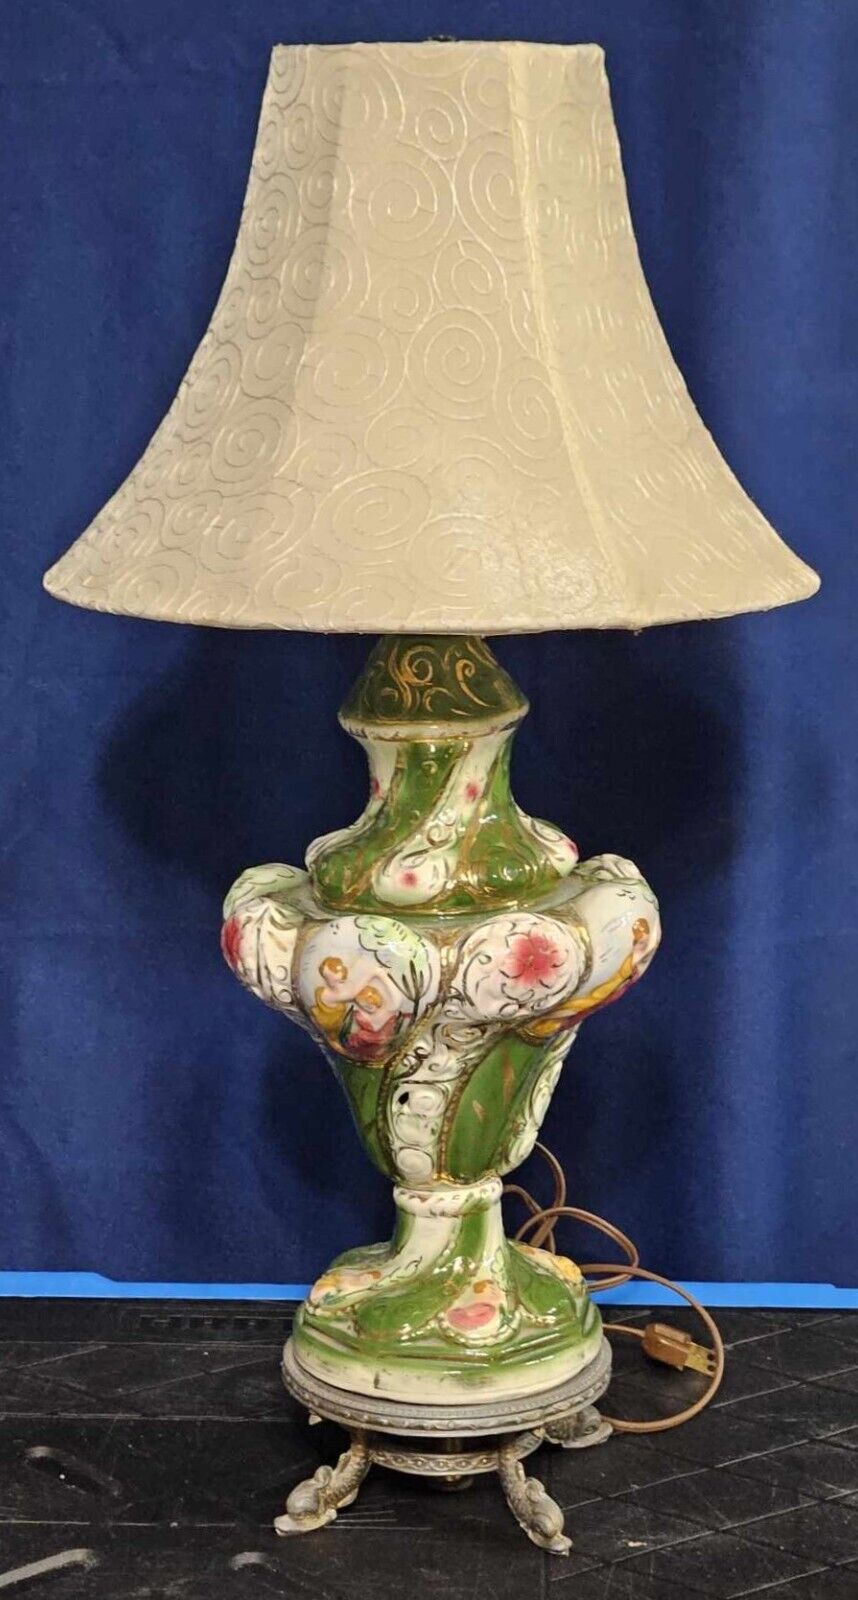 Vintage Italy Capodimonte Antique Cherub Lamp Tested Working, Minor Cosmetic